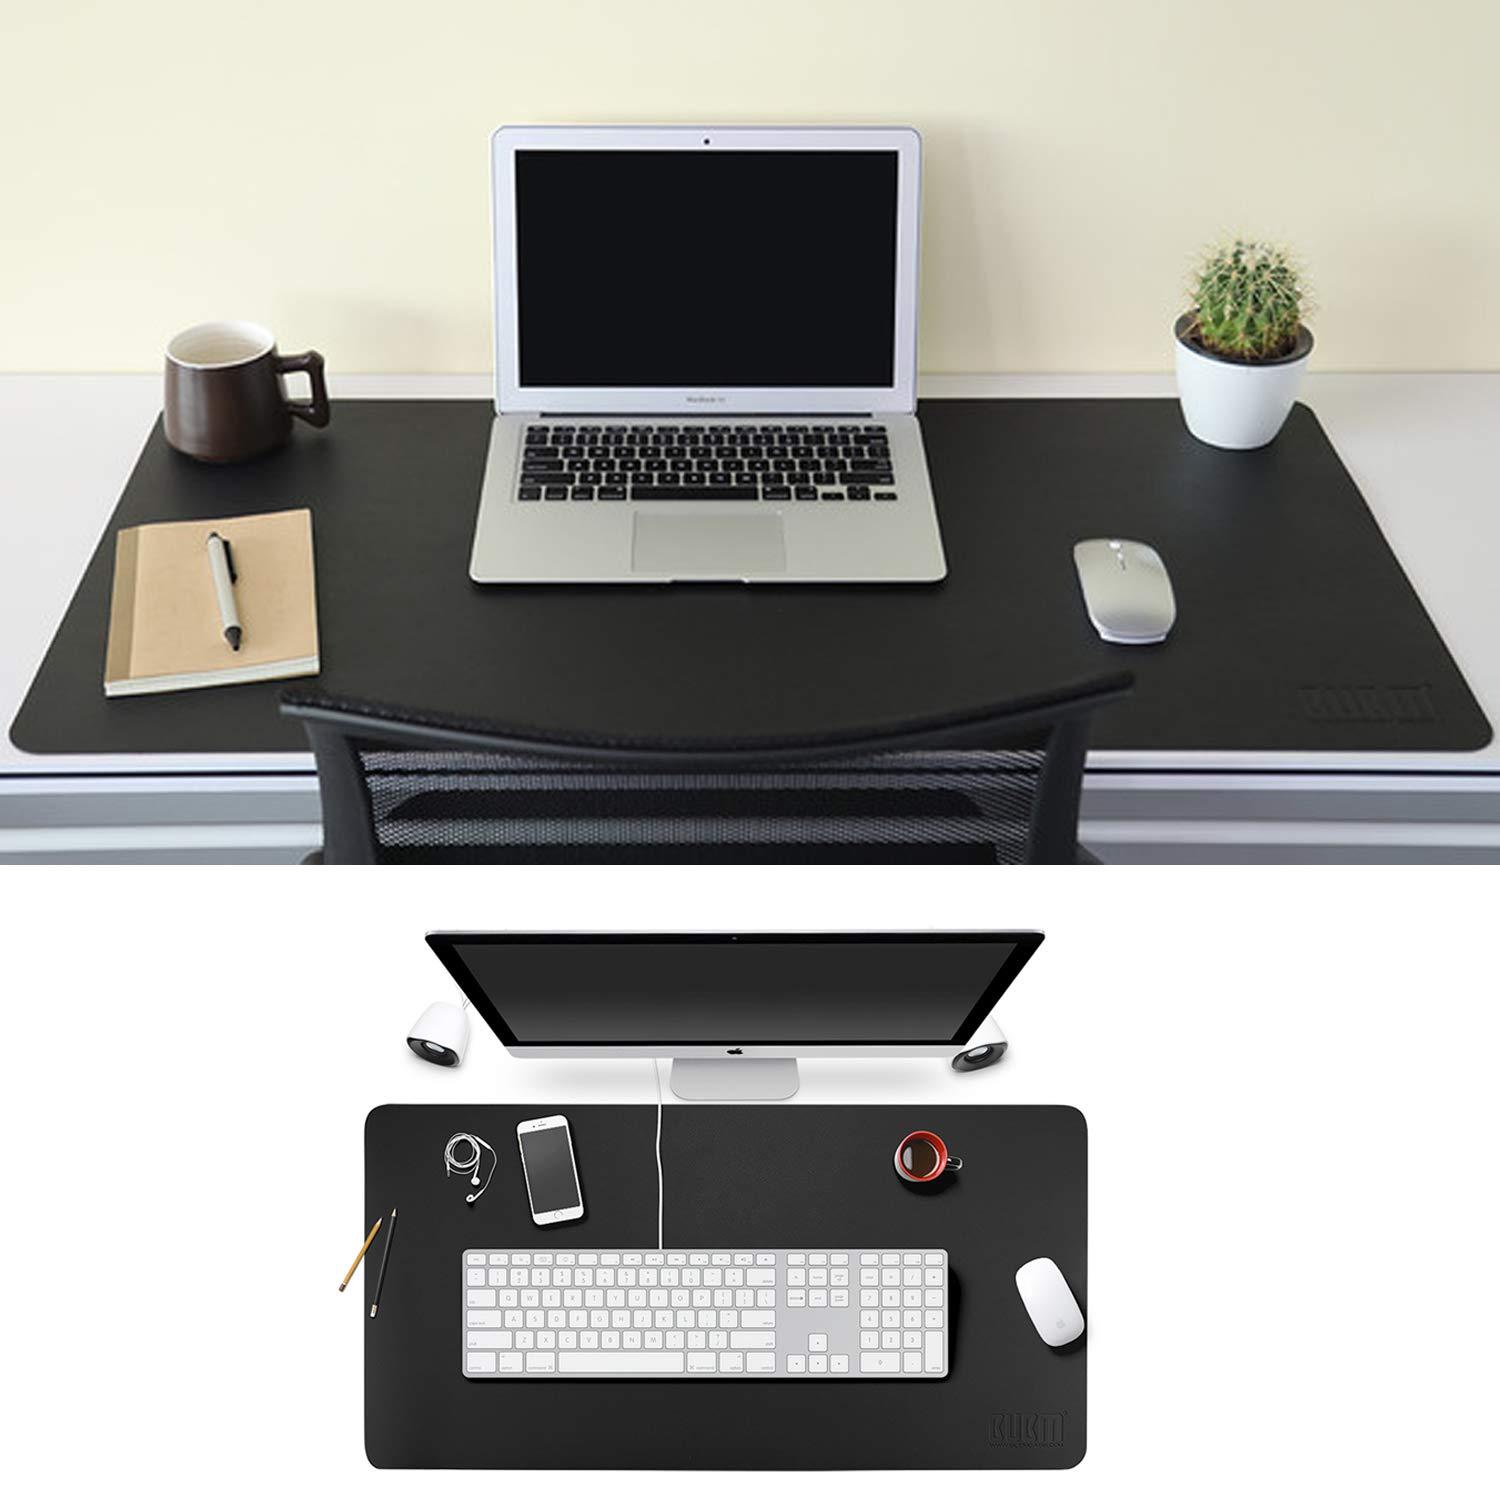 BUBM BGZD XL Size Desk Mat Mouse Pad แผ่นรองเม้าส์ขนาดใหญ่